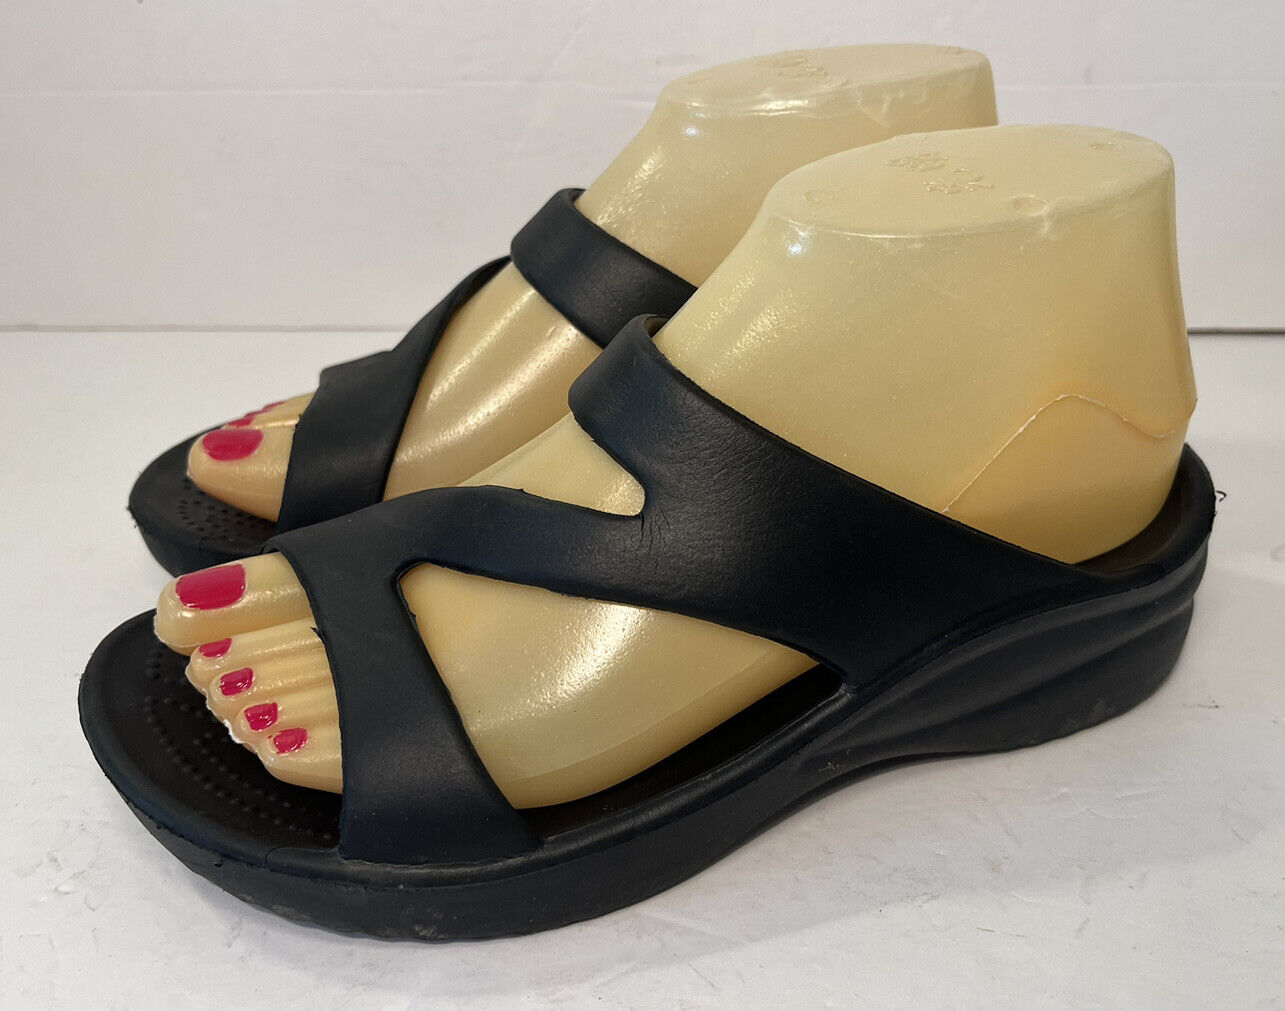 Dawgs Hounds Z Strap Rubber Comfort Sandals Slides Black - Sz 5 | eBay